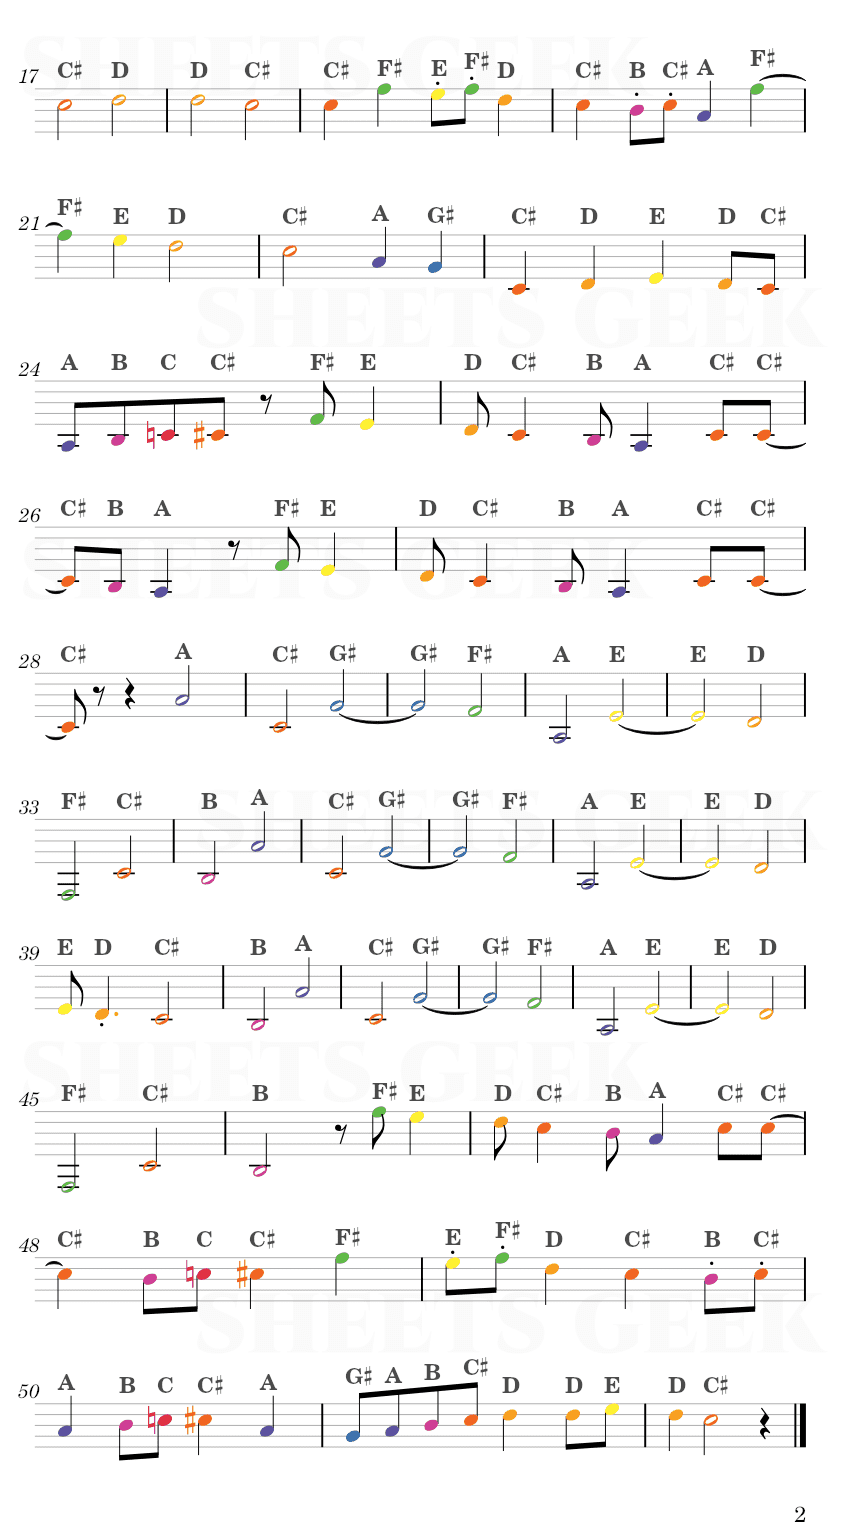 Washing Machine Heart - Mitski Easy Sheet Music Free for piano, keyboard, flute, violin, sax, cello page 2